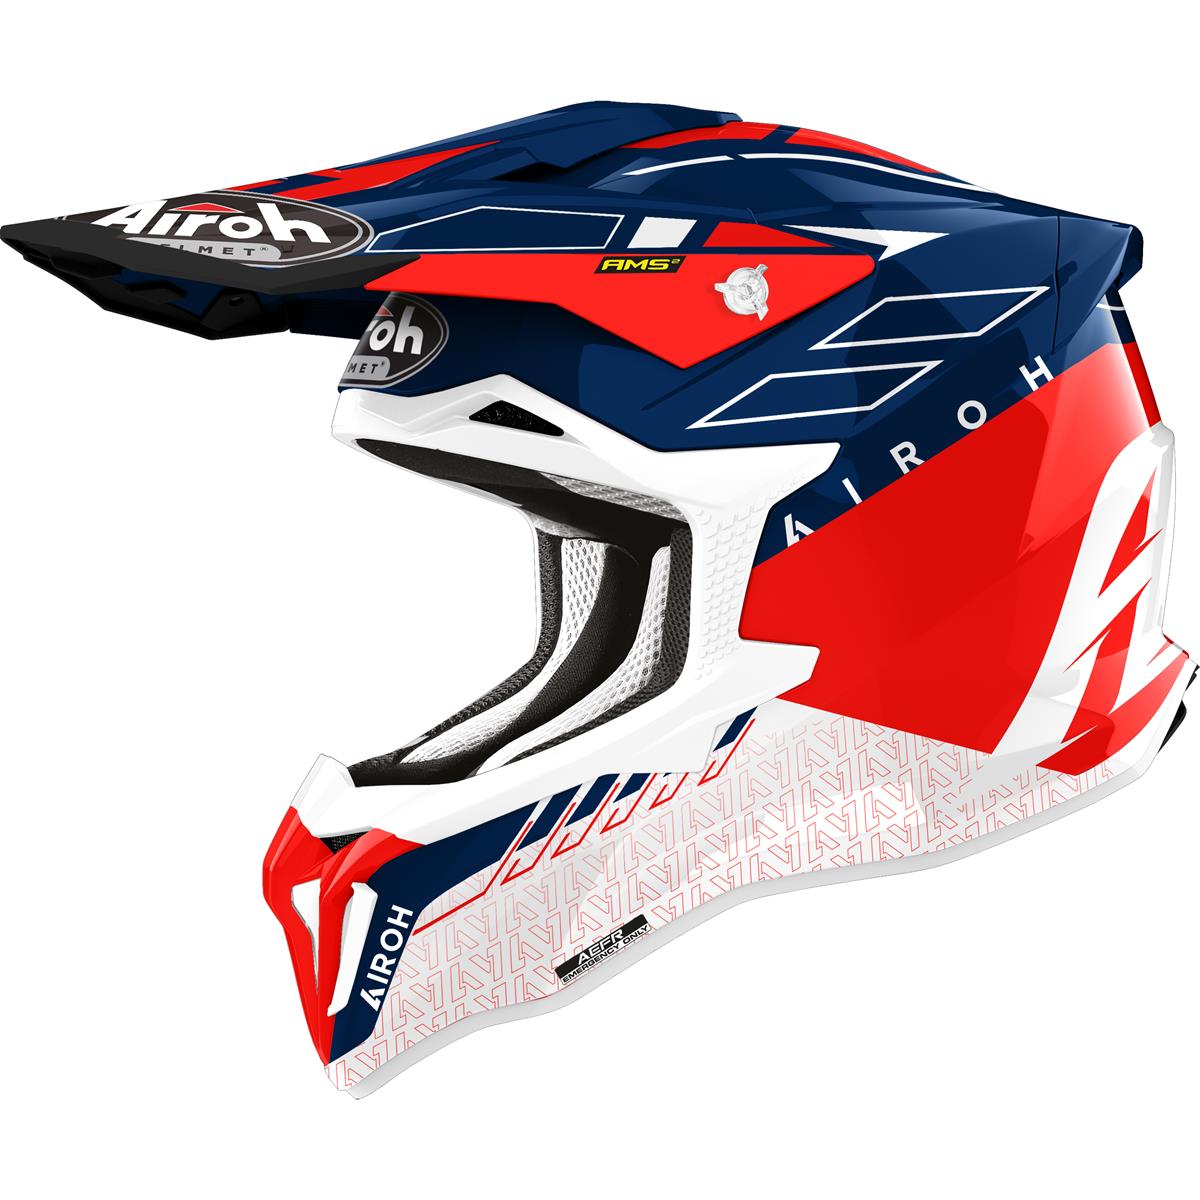 Airoh Motocross-Helm Strycker Skin - Red Gloss